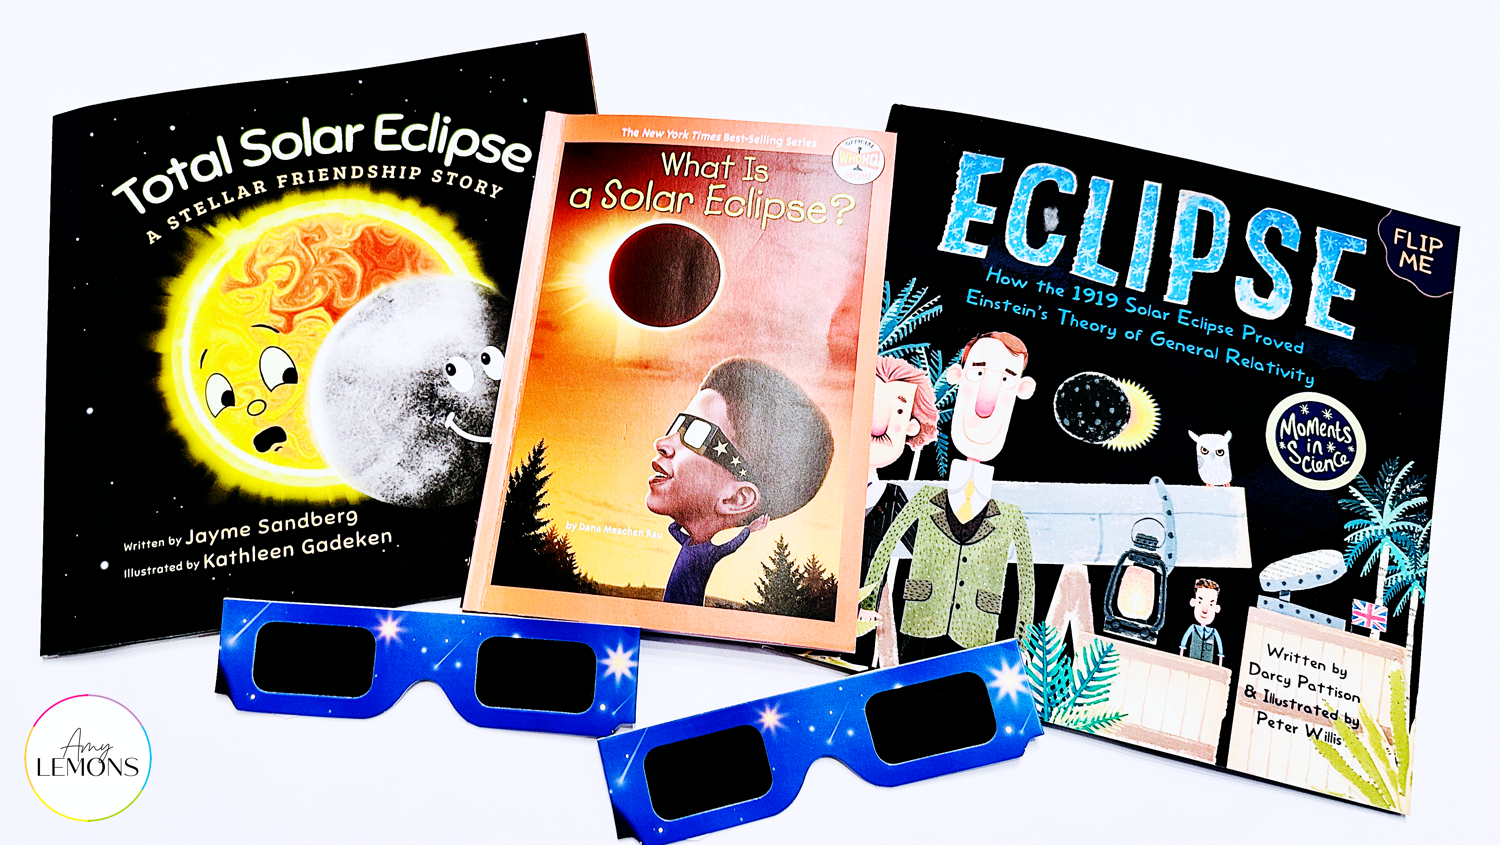 Solar eclipse books and glasses.